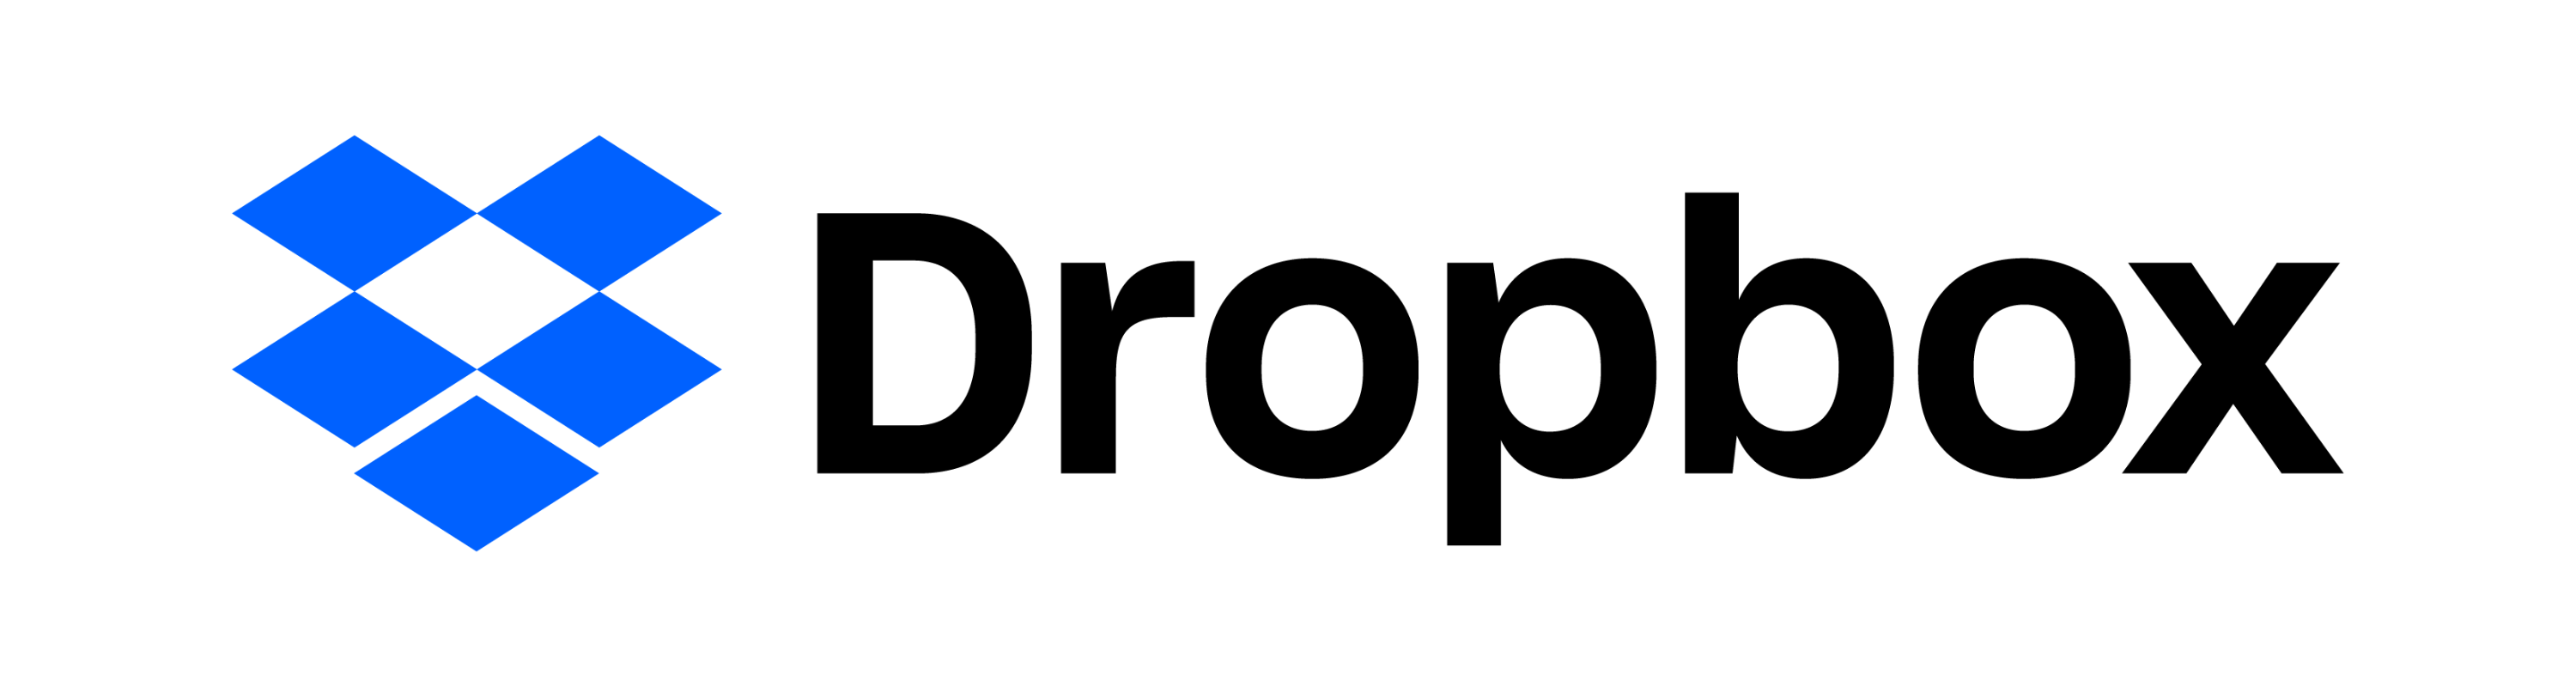 dropbox-logo